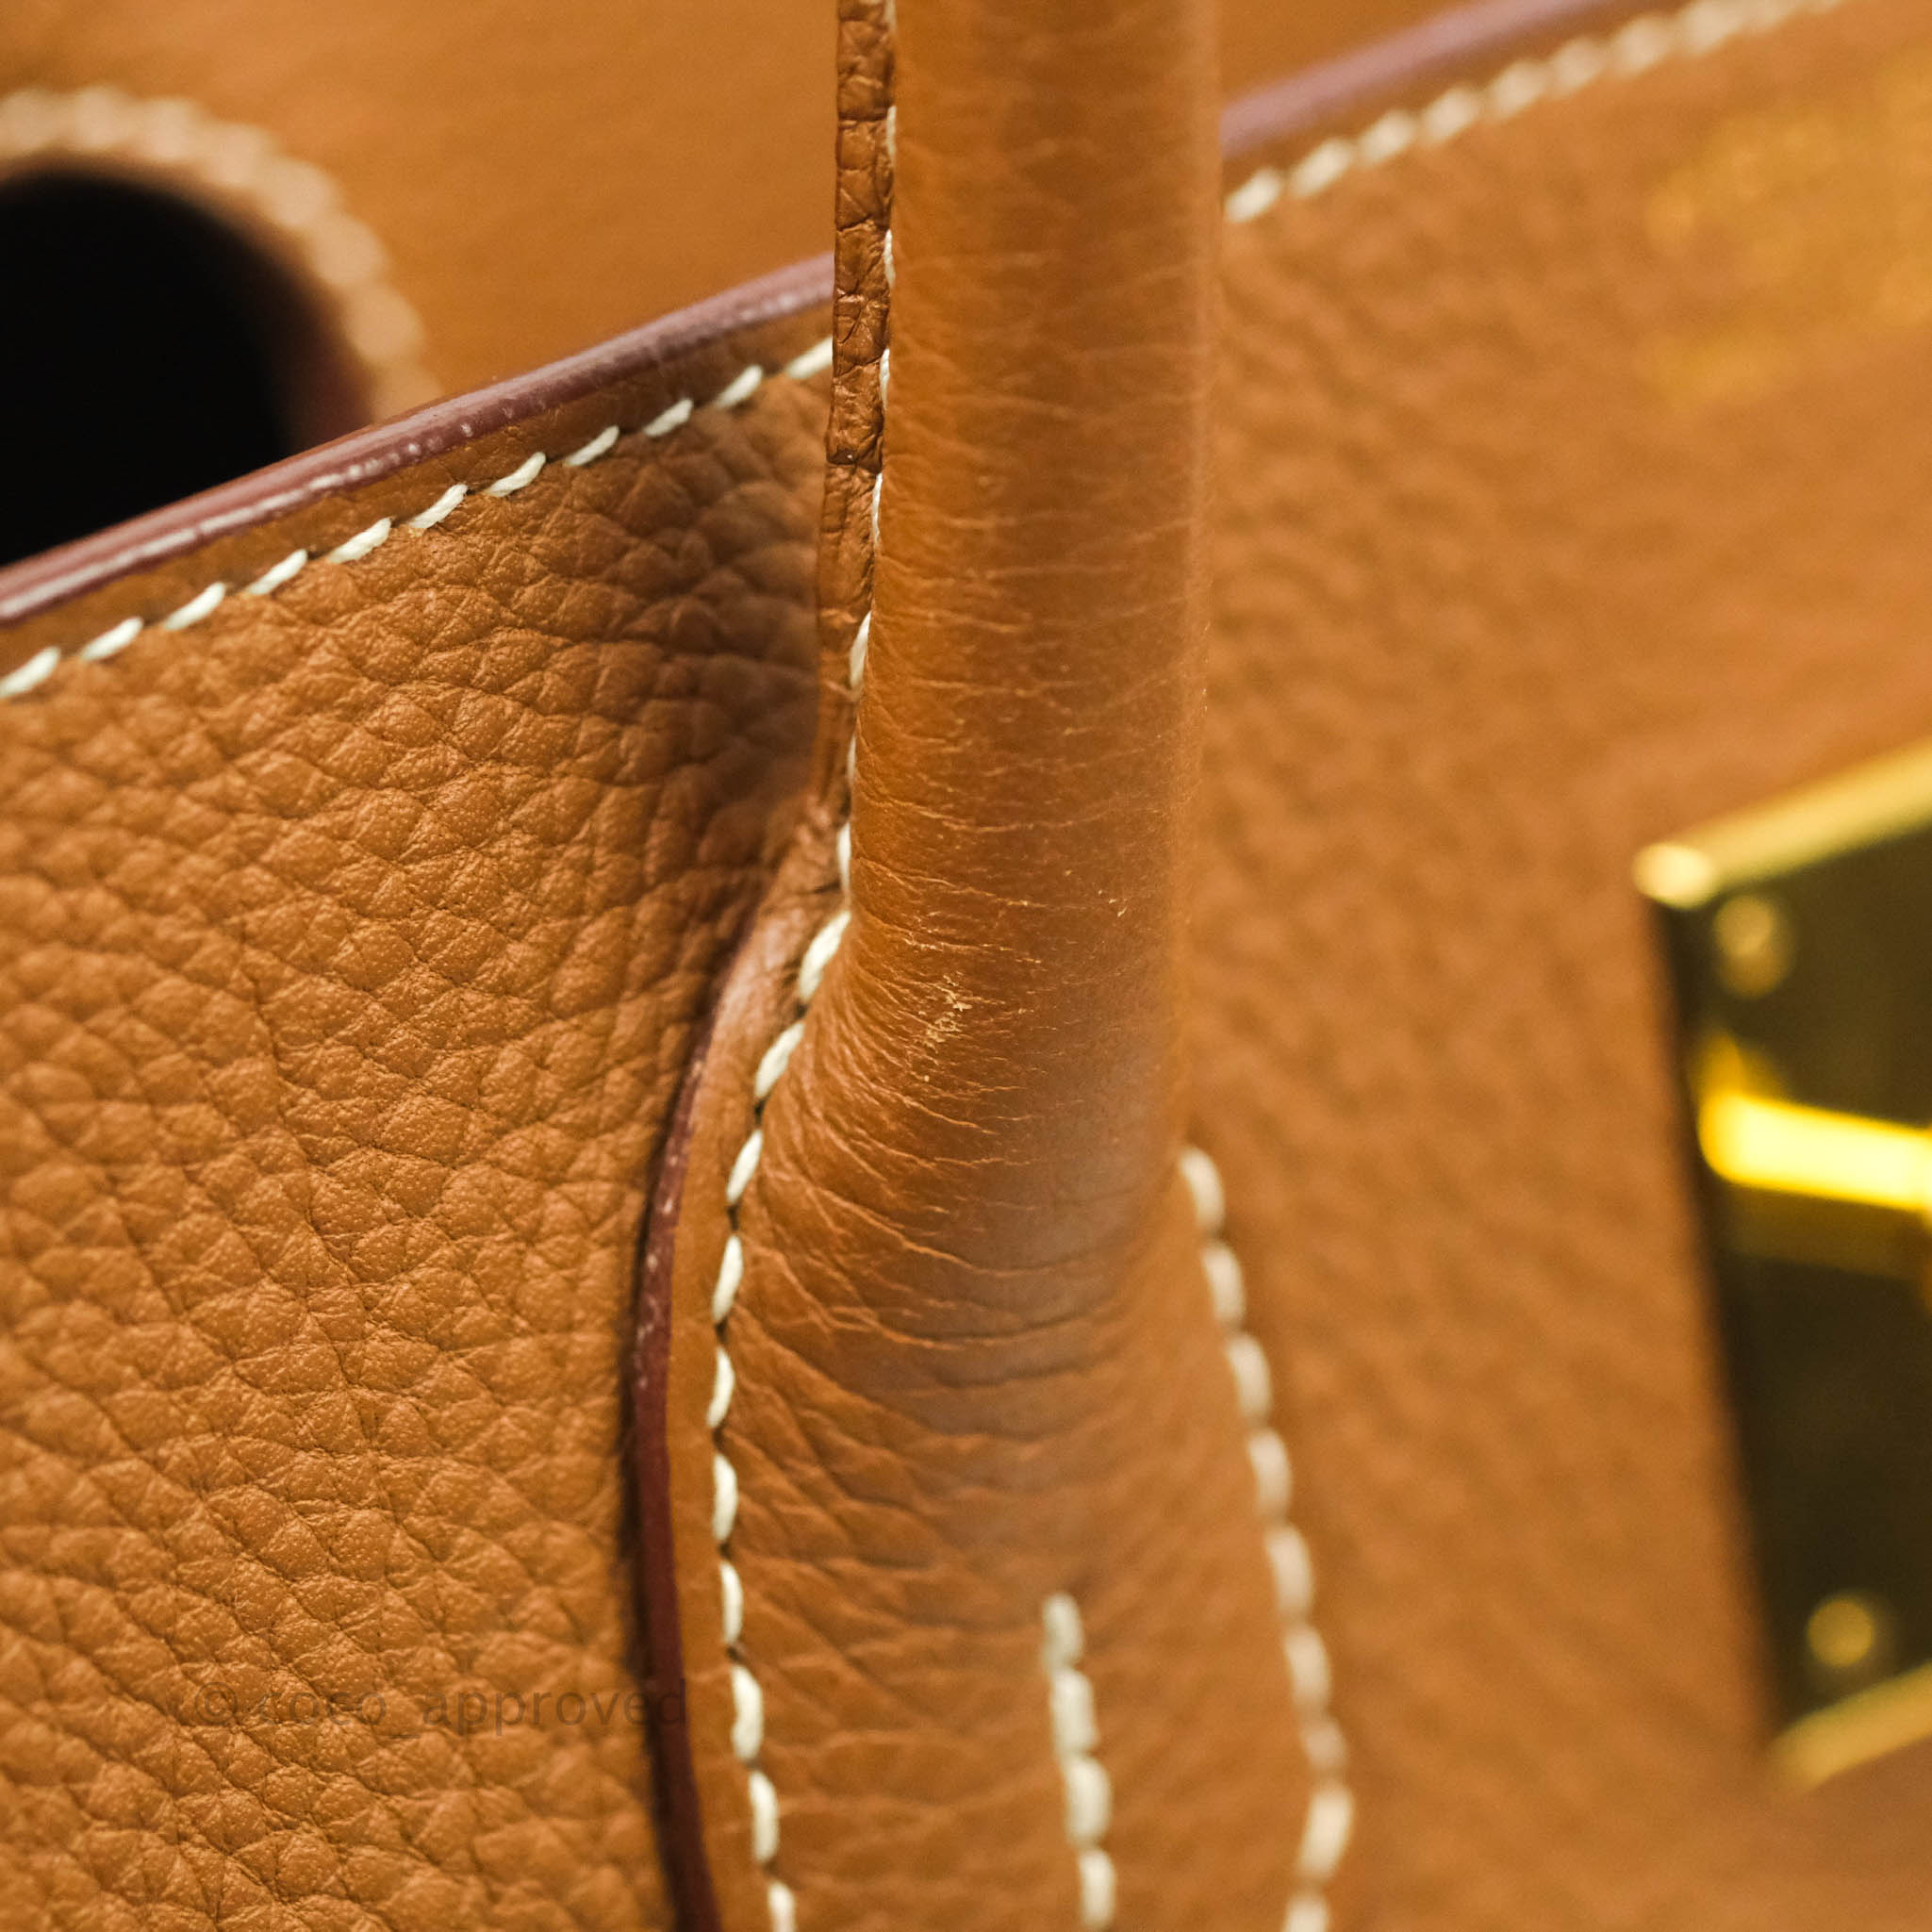 Hermès Birkin 35 Gold Togo Gold Hardware – Coco Approved Studio